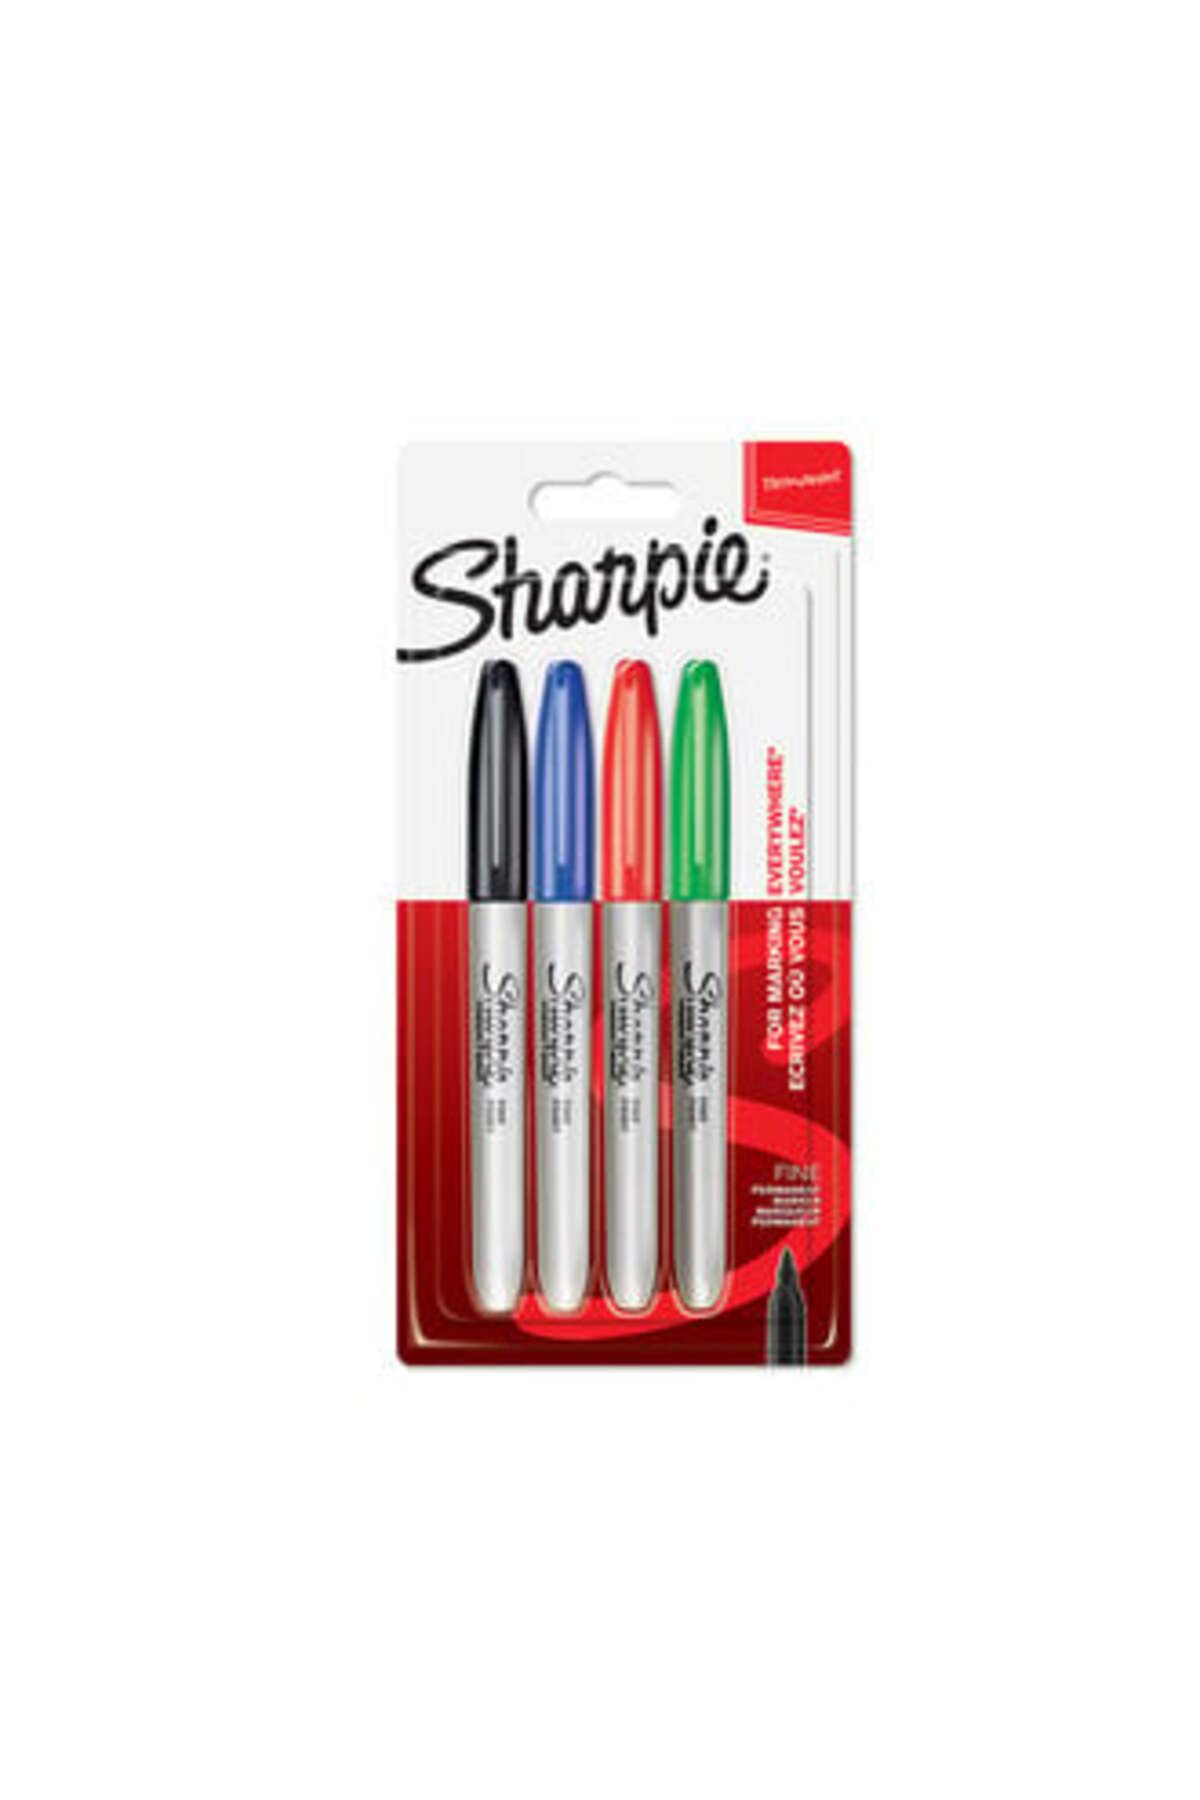 Sharpie Fine Permanent Keçeli kalem, 4'lü Standart Renkli Boya Kalemi Seti ( 1 ADET )